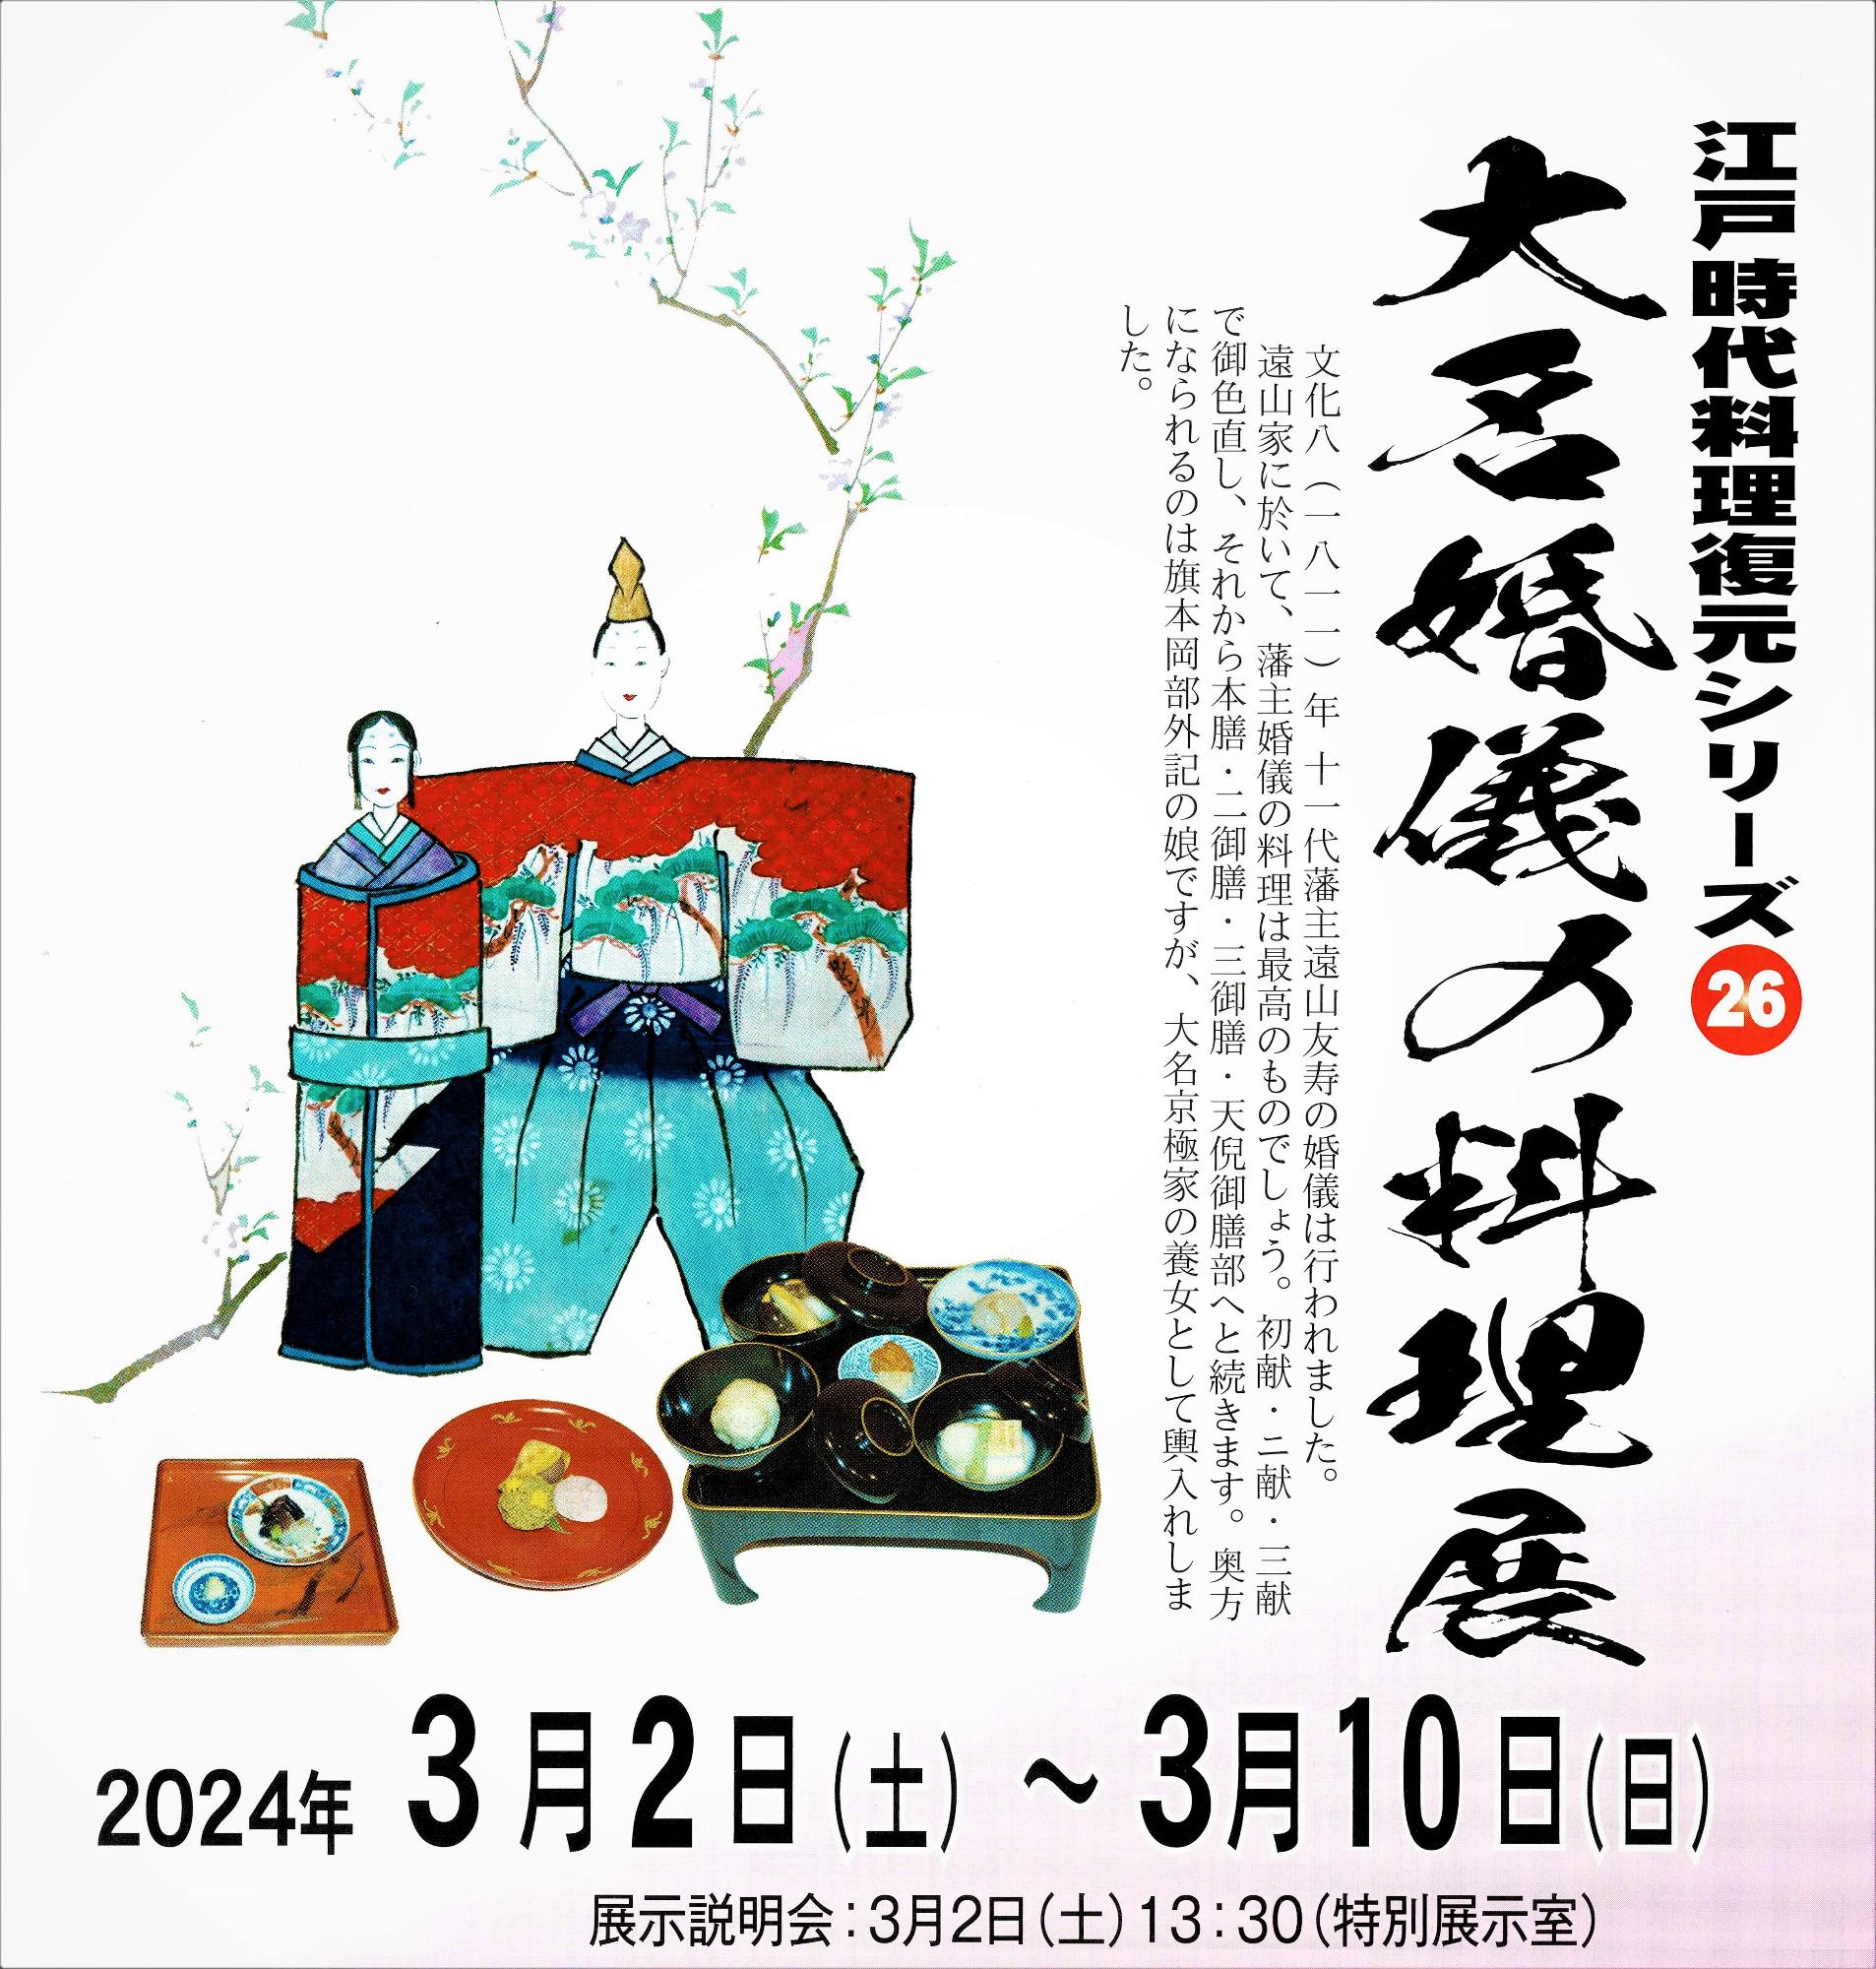 企画展 第26回江戸時代料理復元シリーズ「大名婚儀の料理展」4